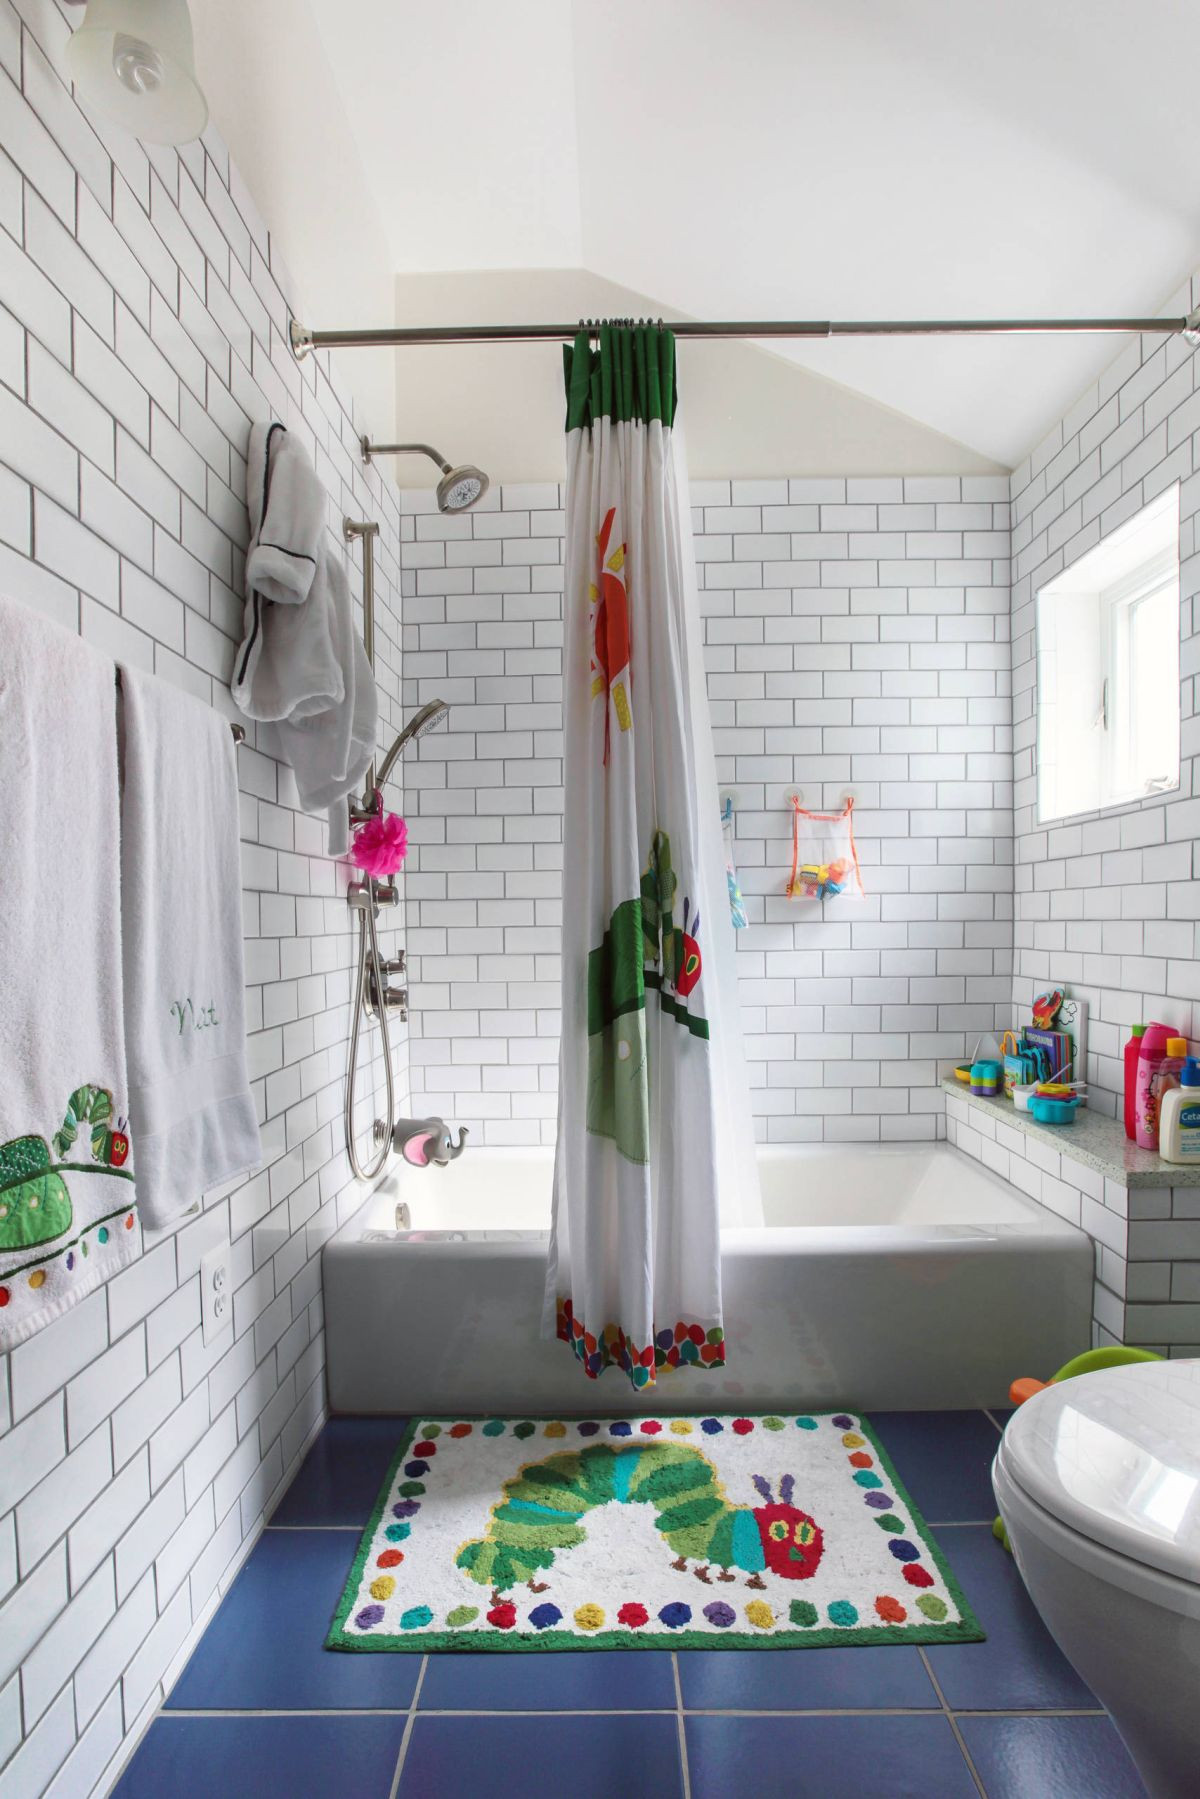 Bathroom Decor Kids
 12 Tips for The Best Kids Bathroom Decor